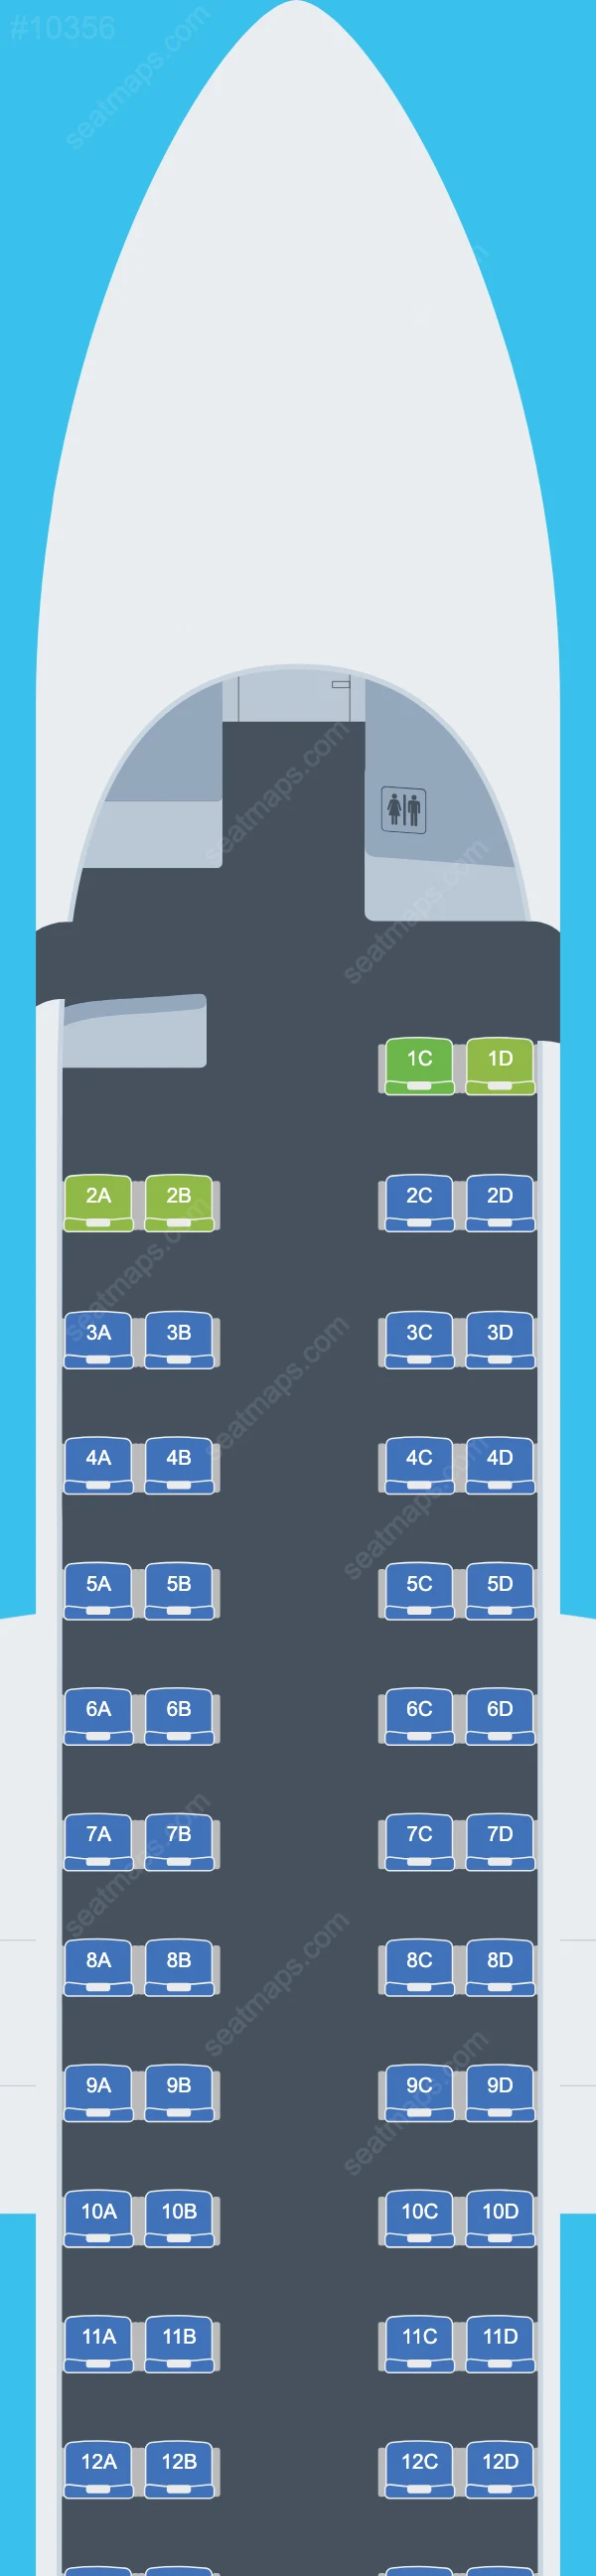 Air Tanzania Bombardier Q400 Seat Maps Q400 V.2